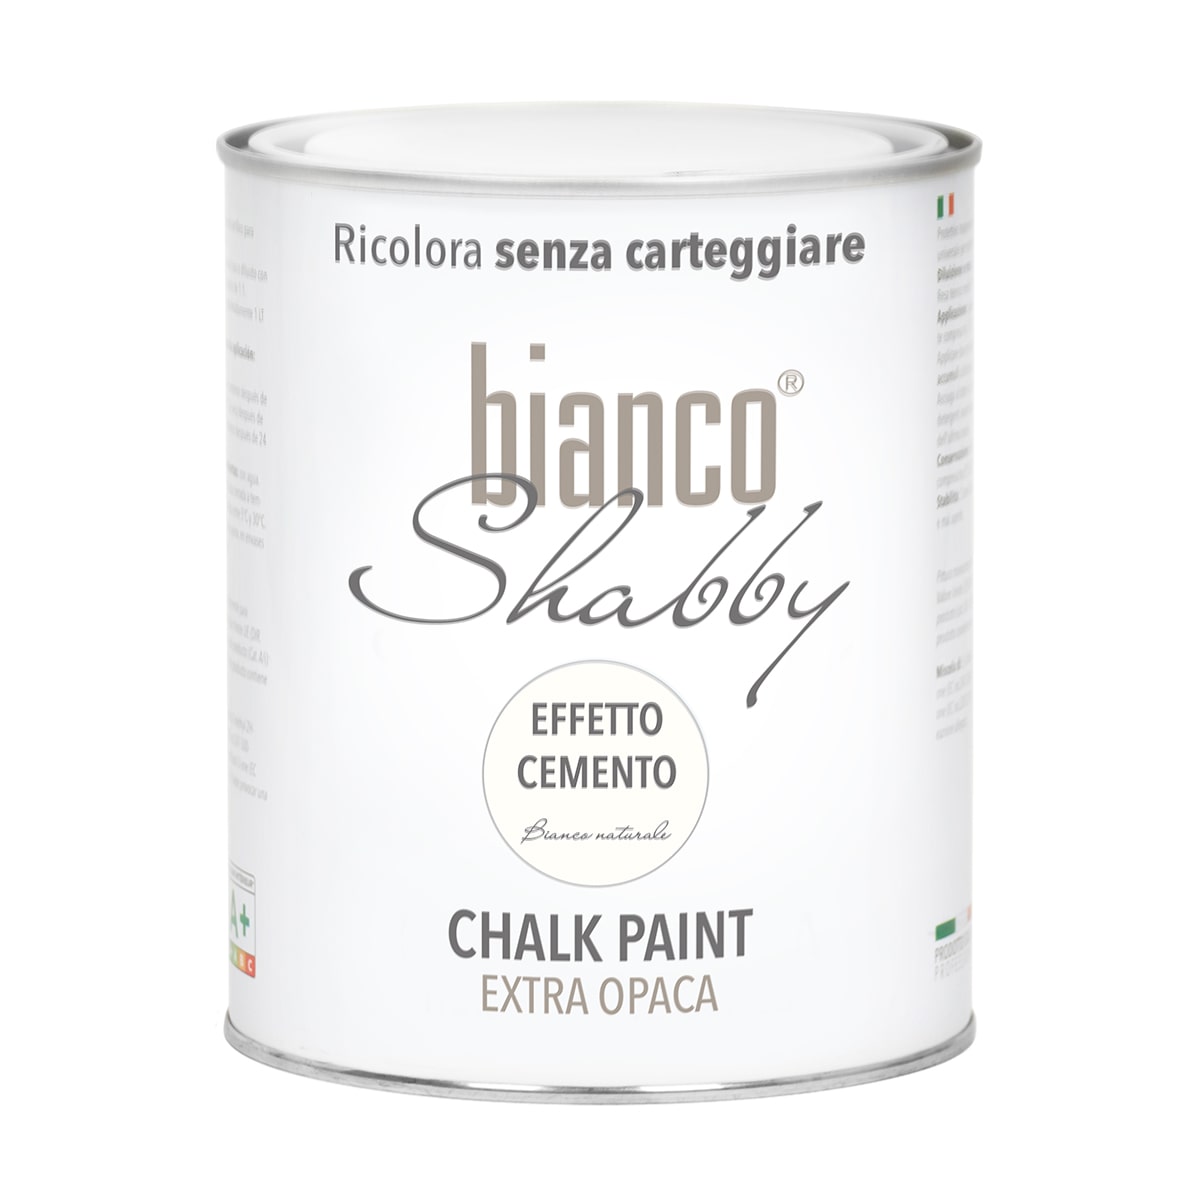 Come si usa vernice gesso chalk paint senza carteggiare Bianco Shabby®